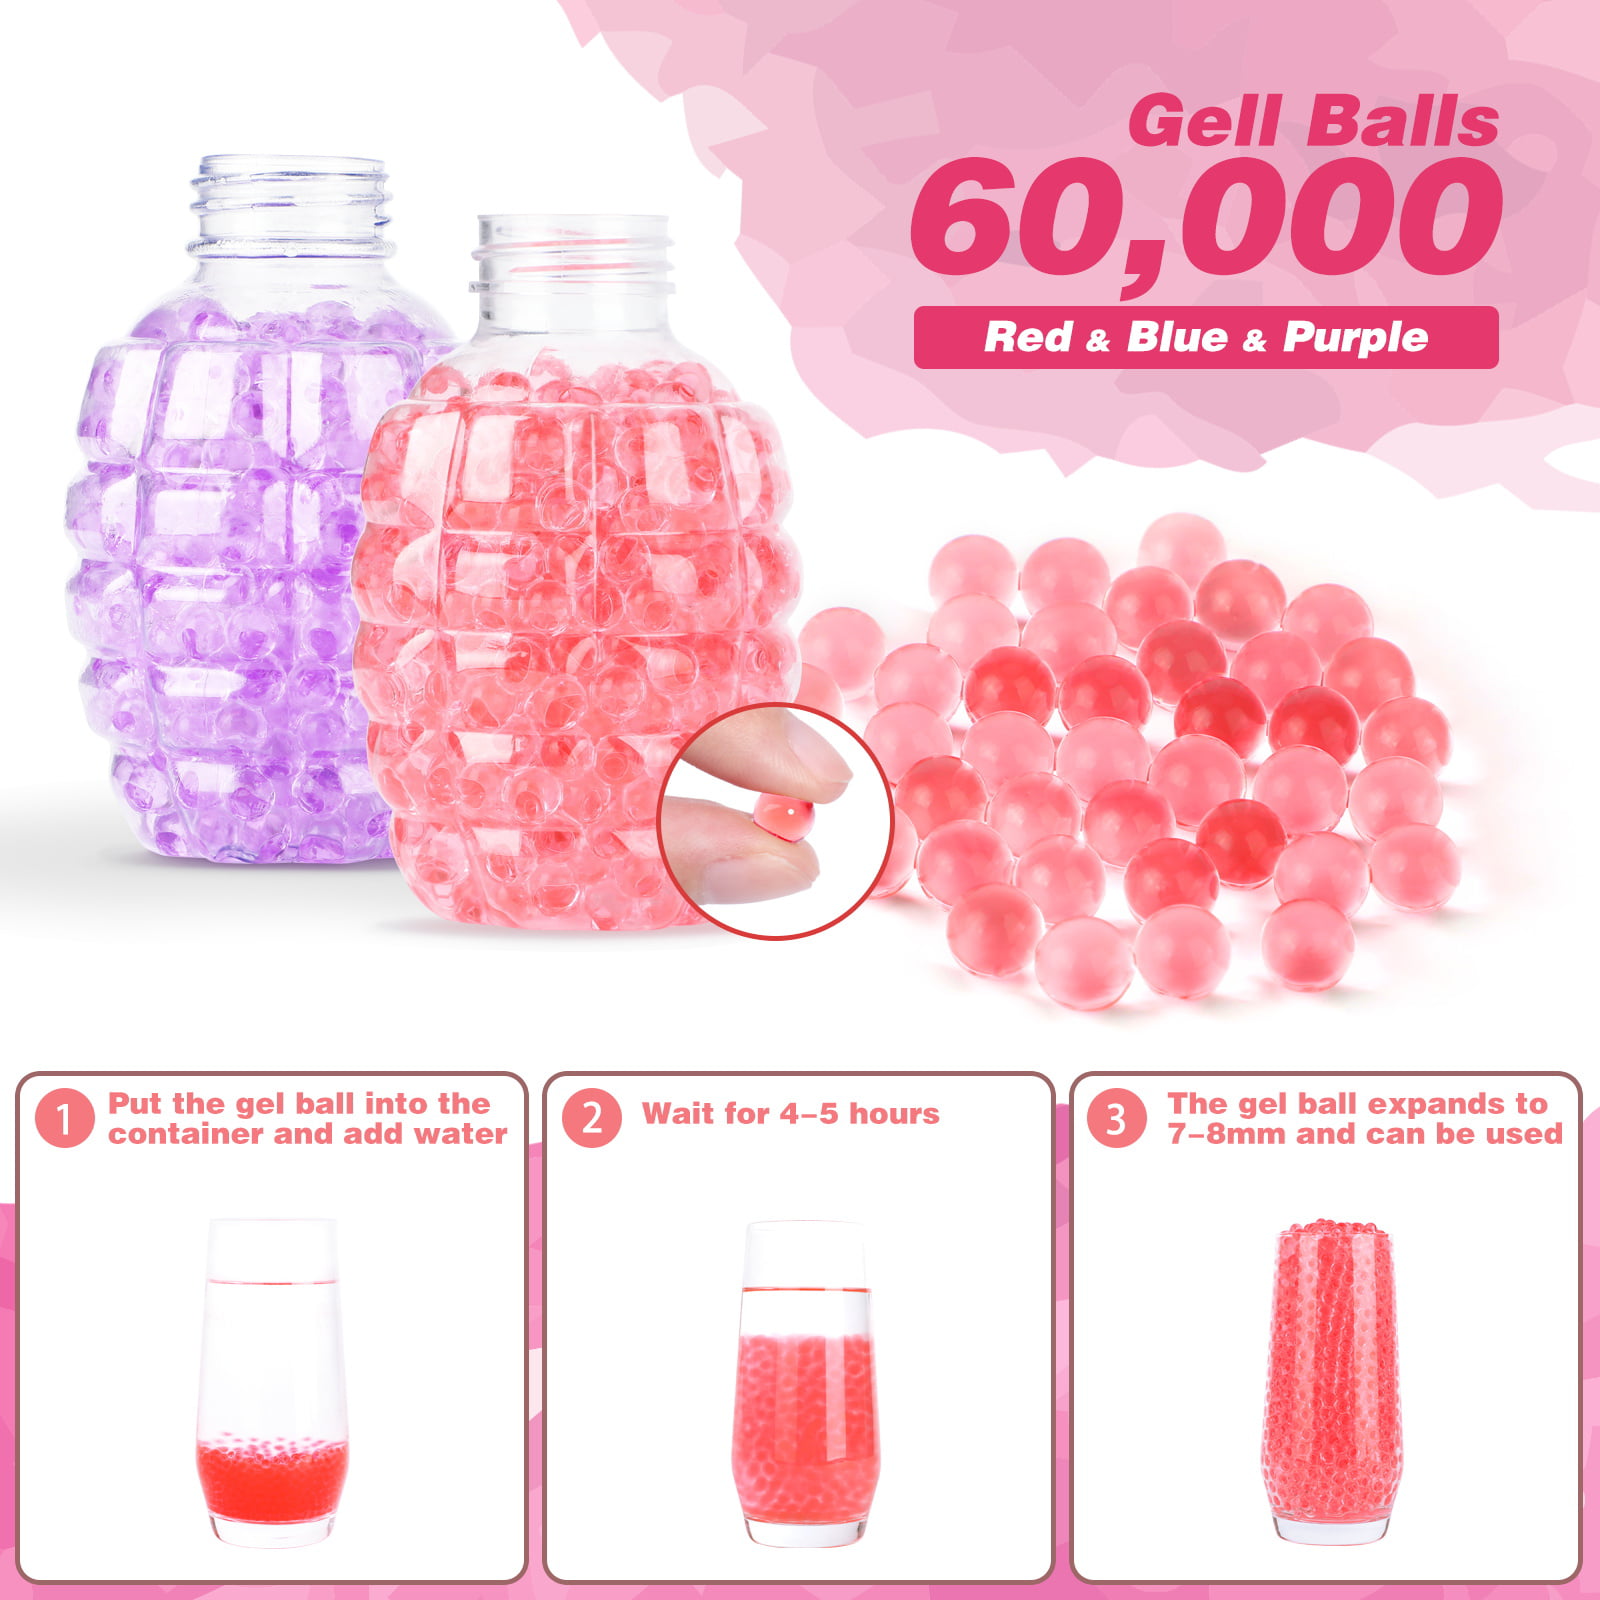 ZHENDUO 60,000pcs Gel Balls 7-8mm Water Beads for Gel Ball Blaster